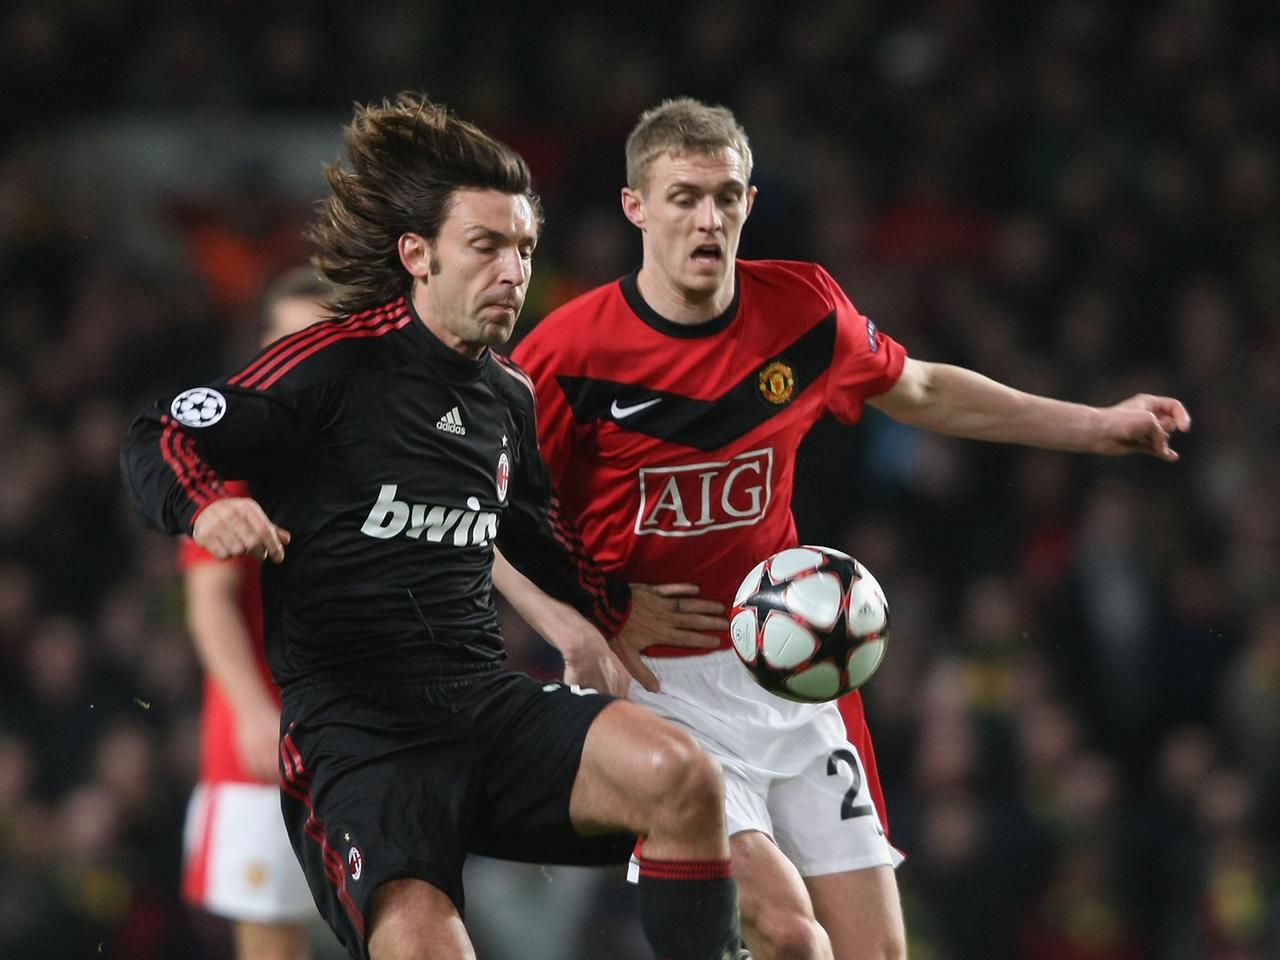 Andrea Pirlo battles with Darren Fletcher when Man Utd last played Milan at Old Trafford in 2010